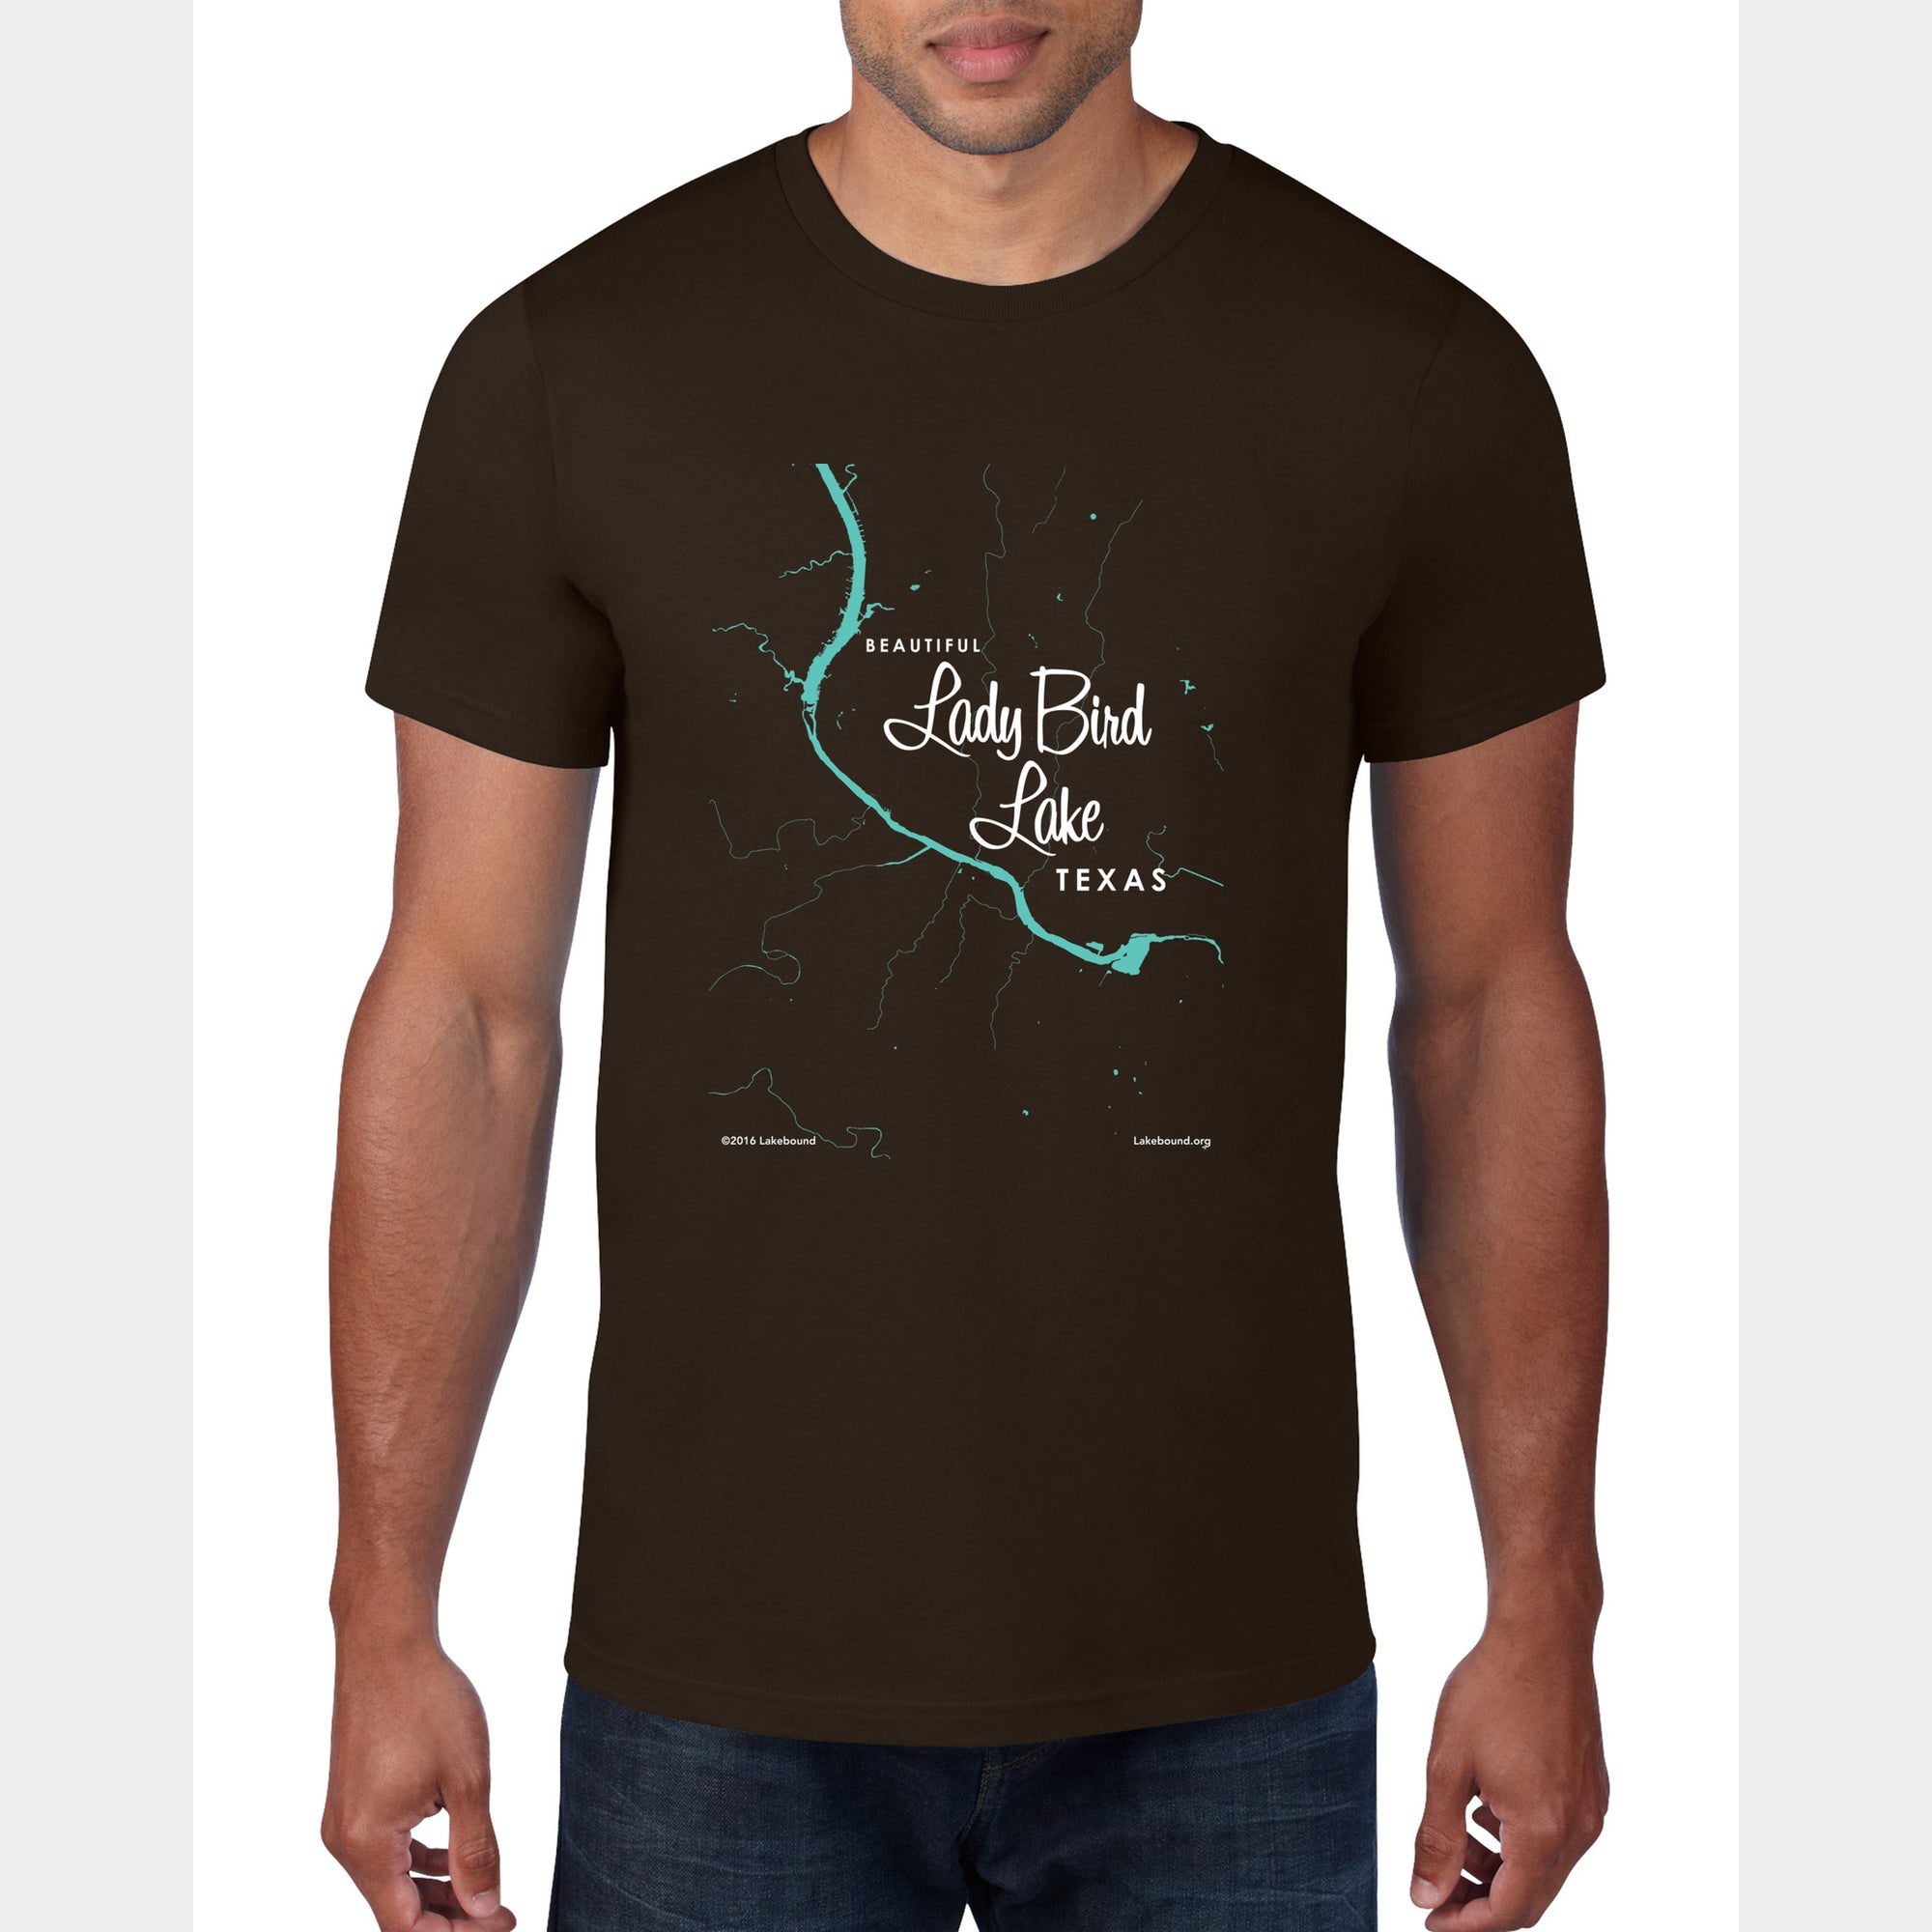 Lady Bird Lake Texas, T-Shirt